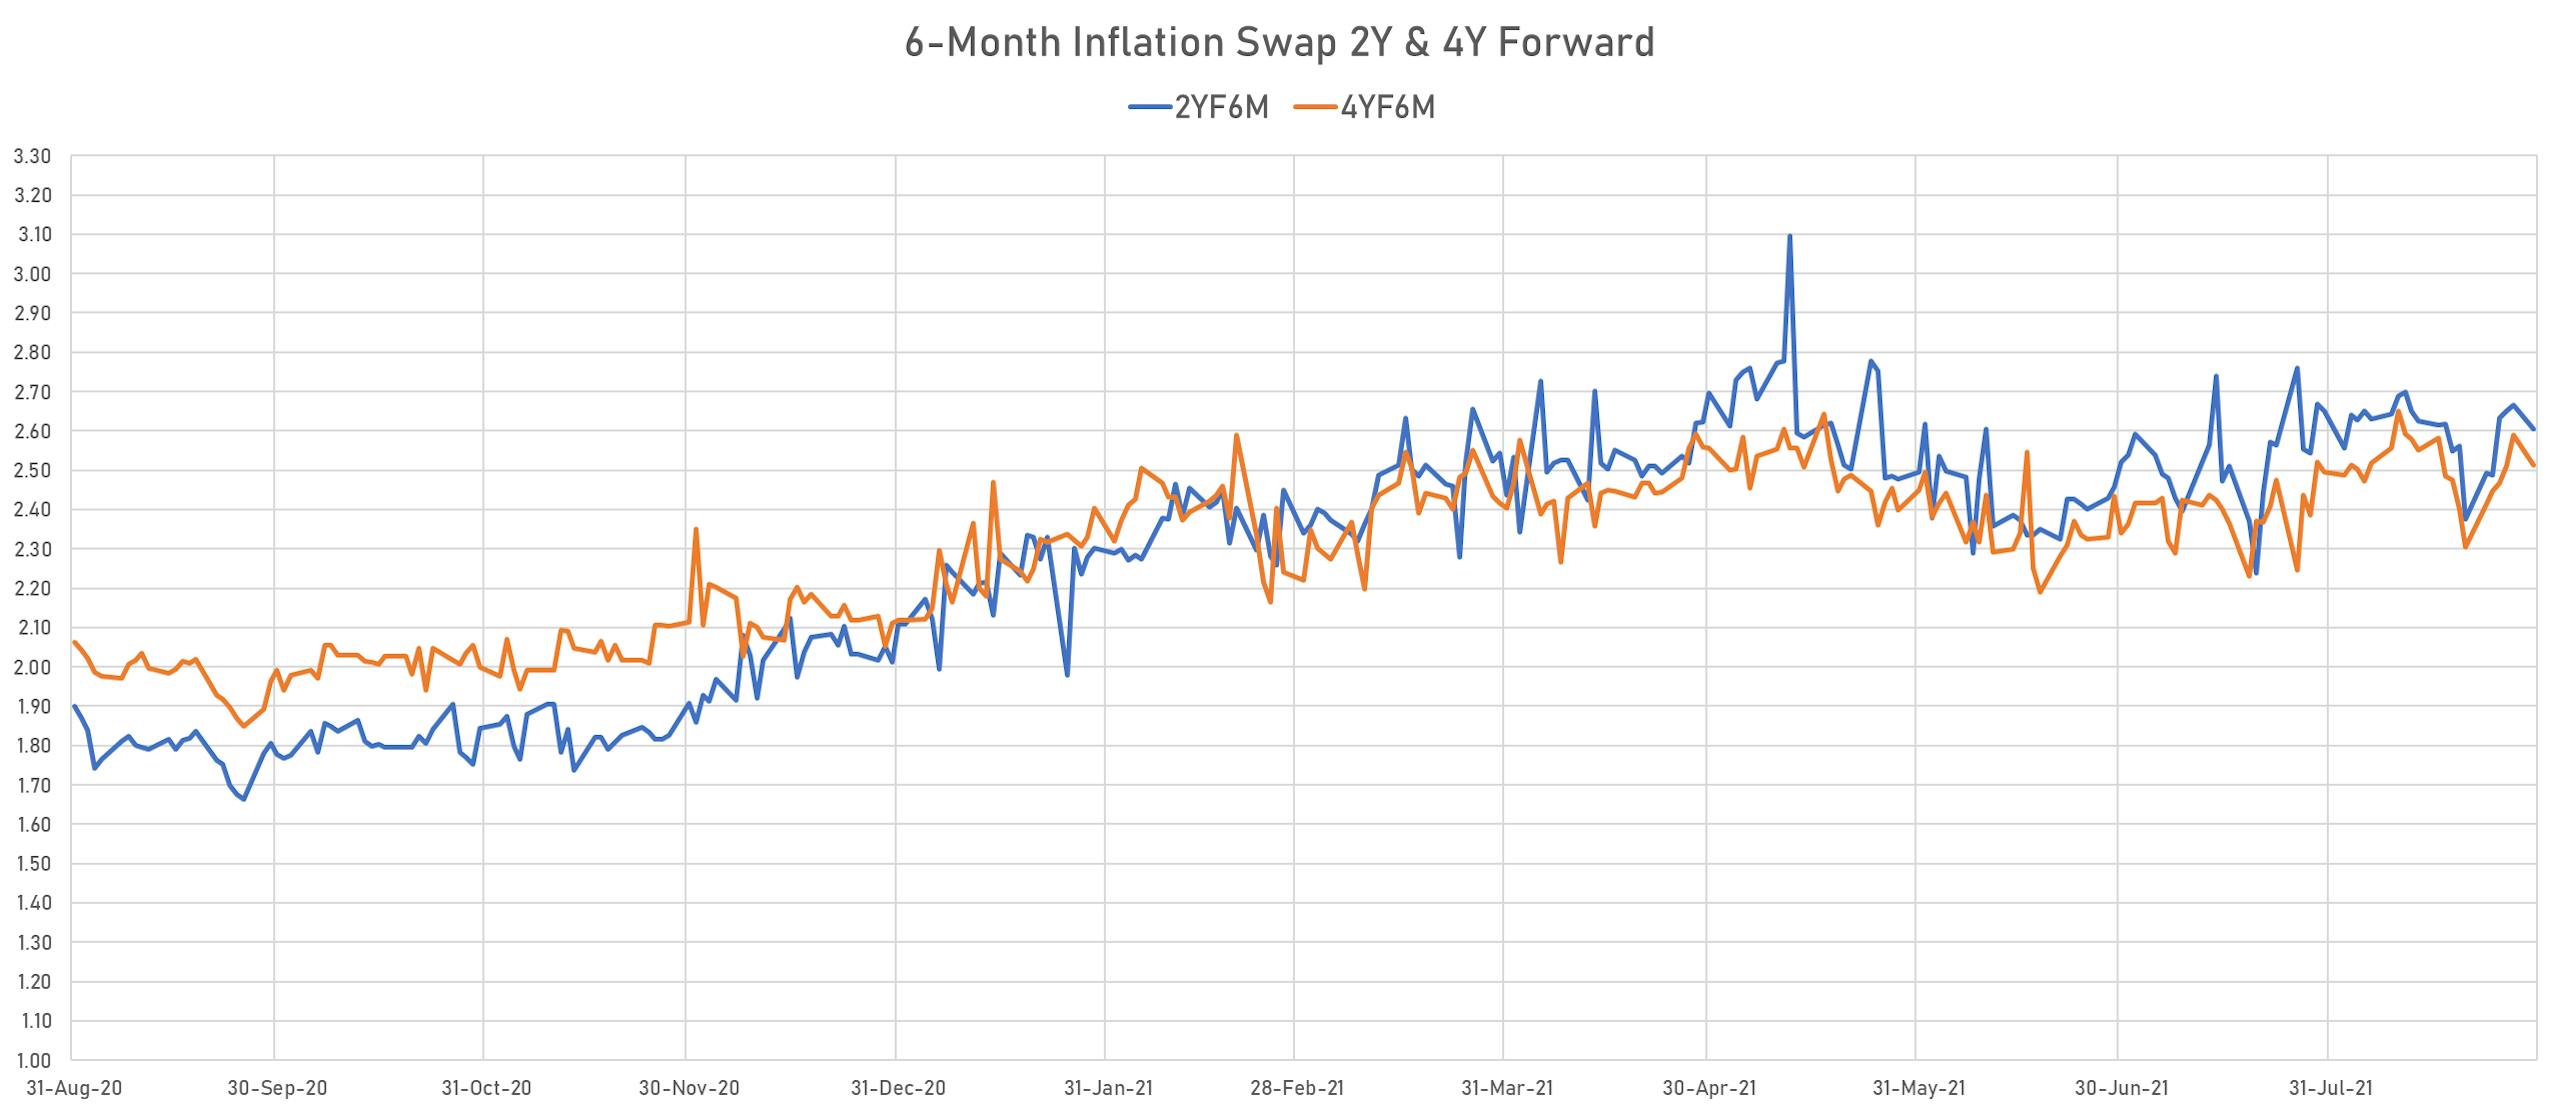 Short-Term Inflation Swap Forward | Sources: phipost.com, Refinitiv data